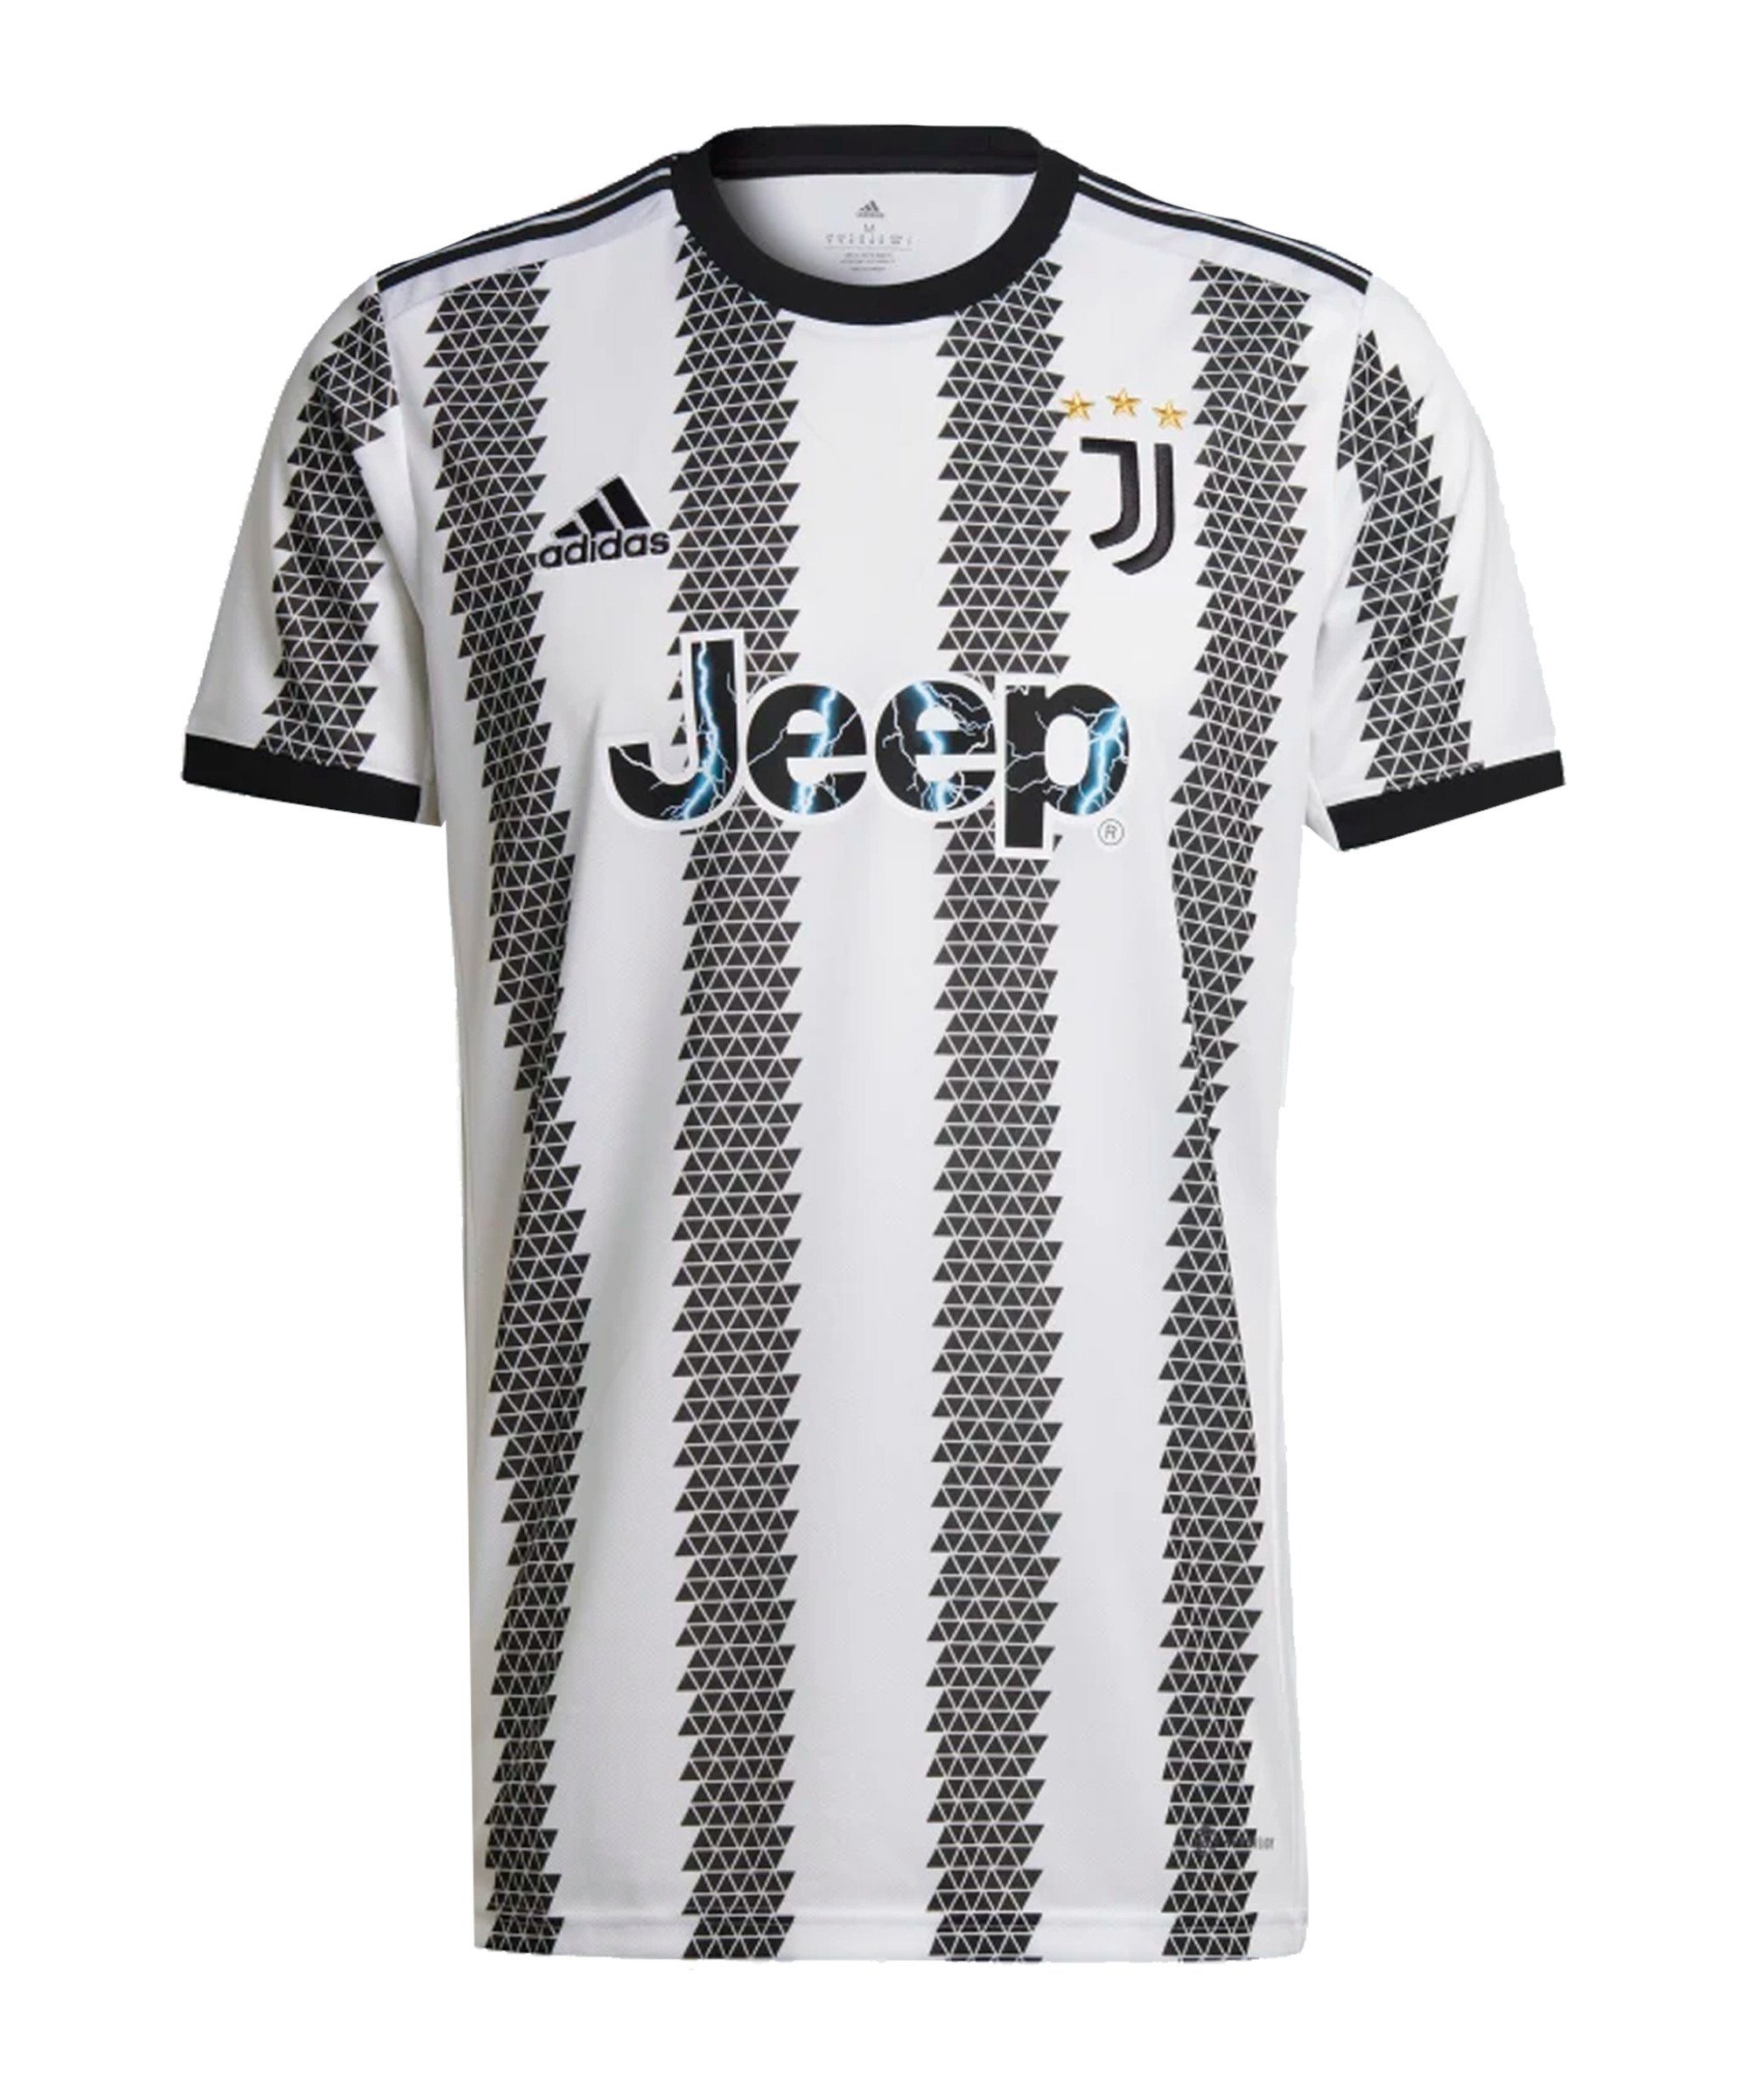 Juventus Turin 2022/2023 weissschwarz Performance adidas adidas Trikot Fußballtrikot Originals UCL